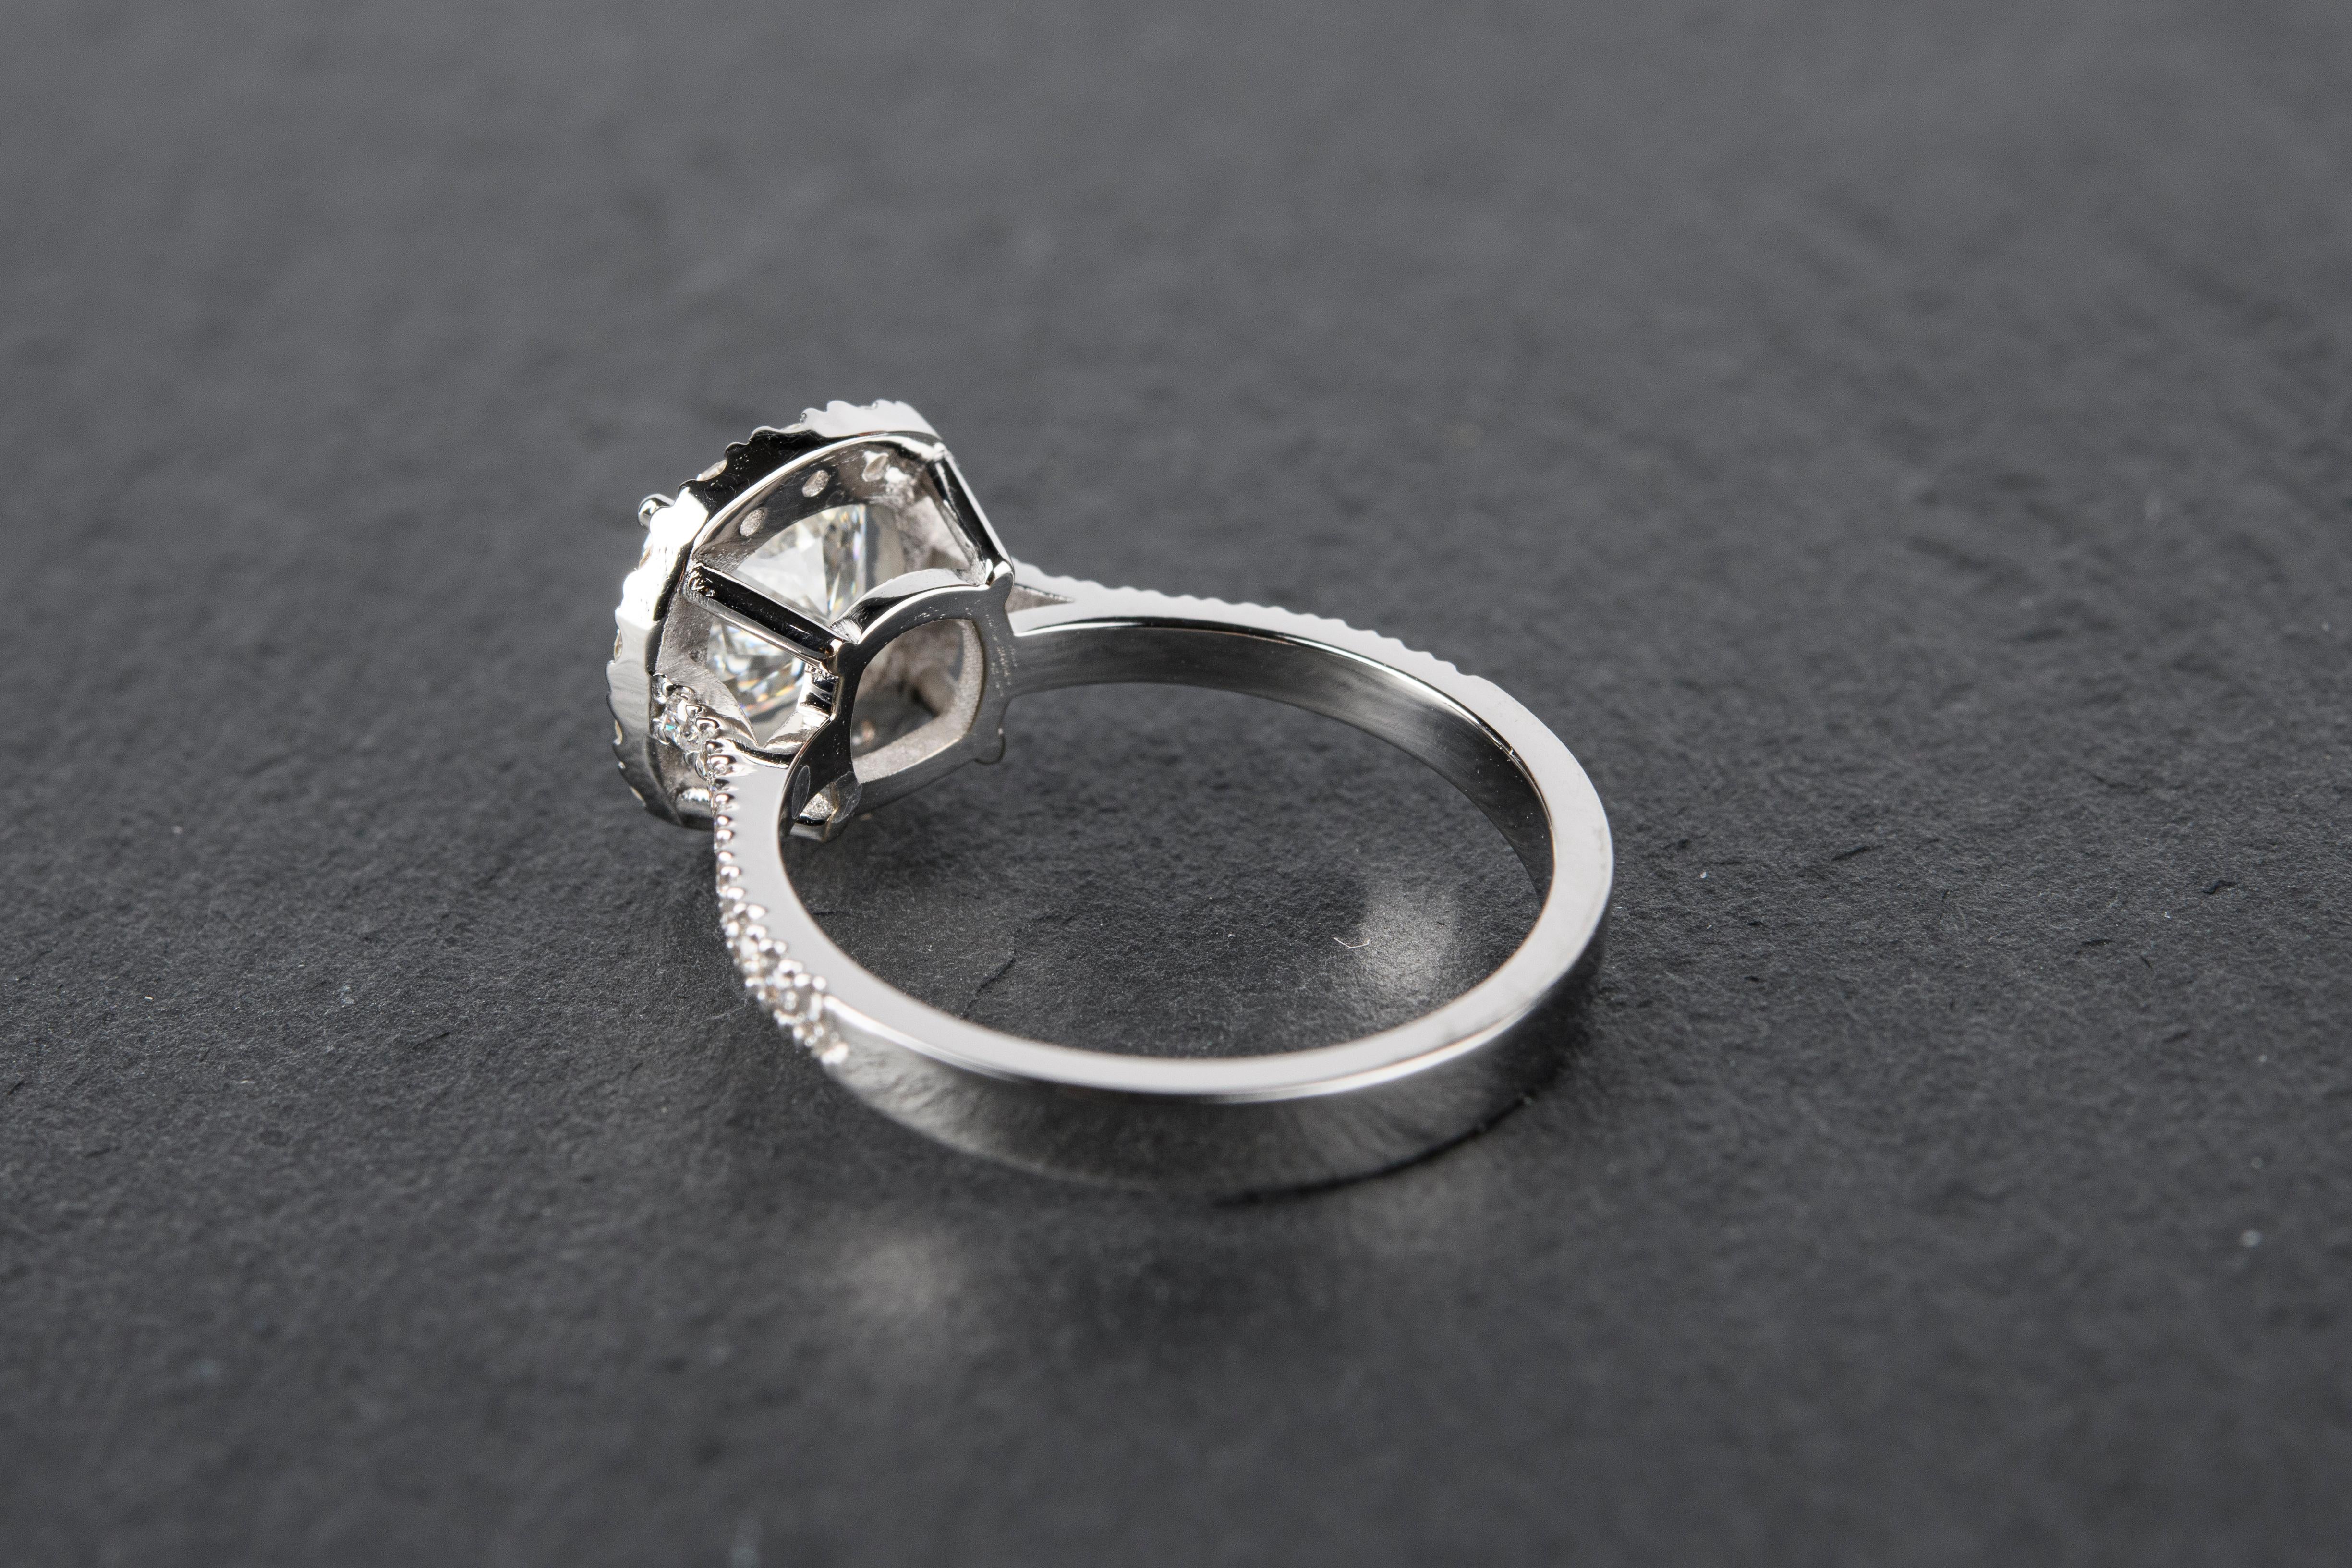 1.85 carat diamond ring